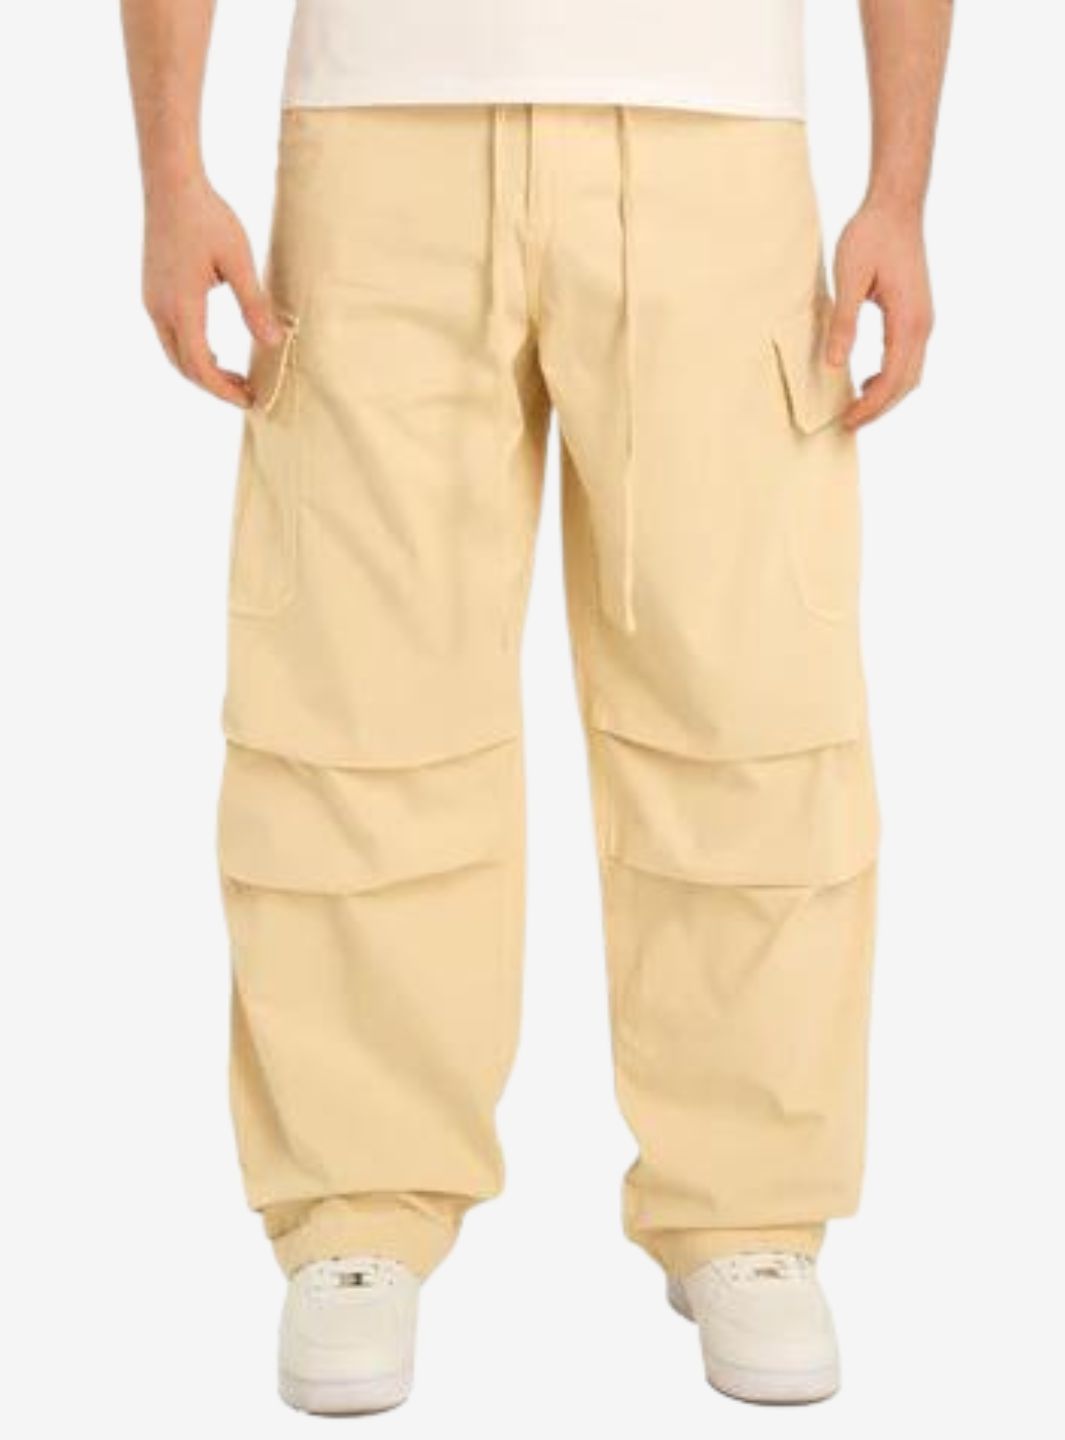 Garment WorkShop Parachute Pants Cream | ResellZone